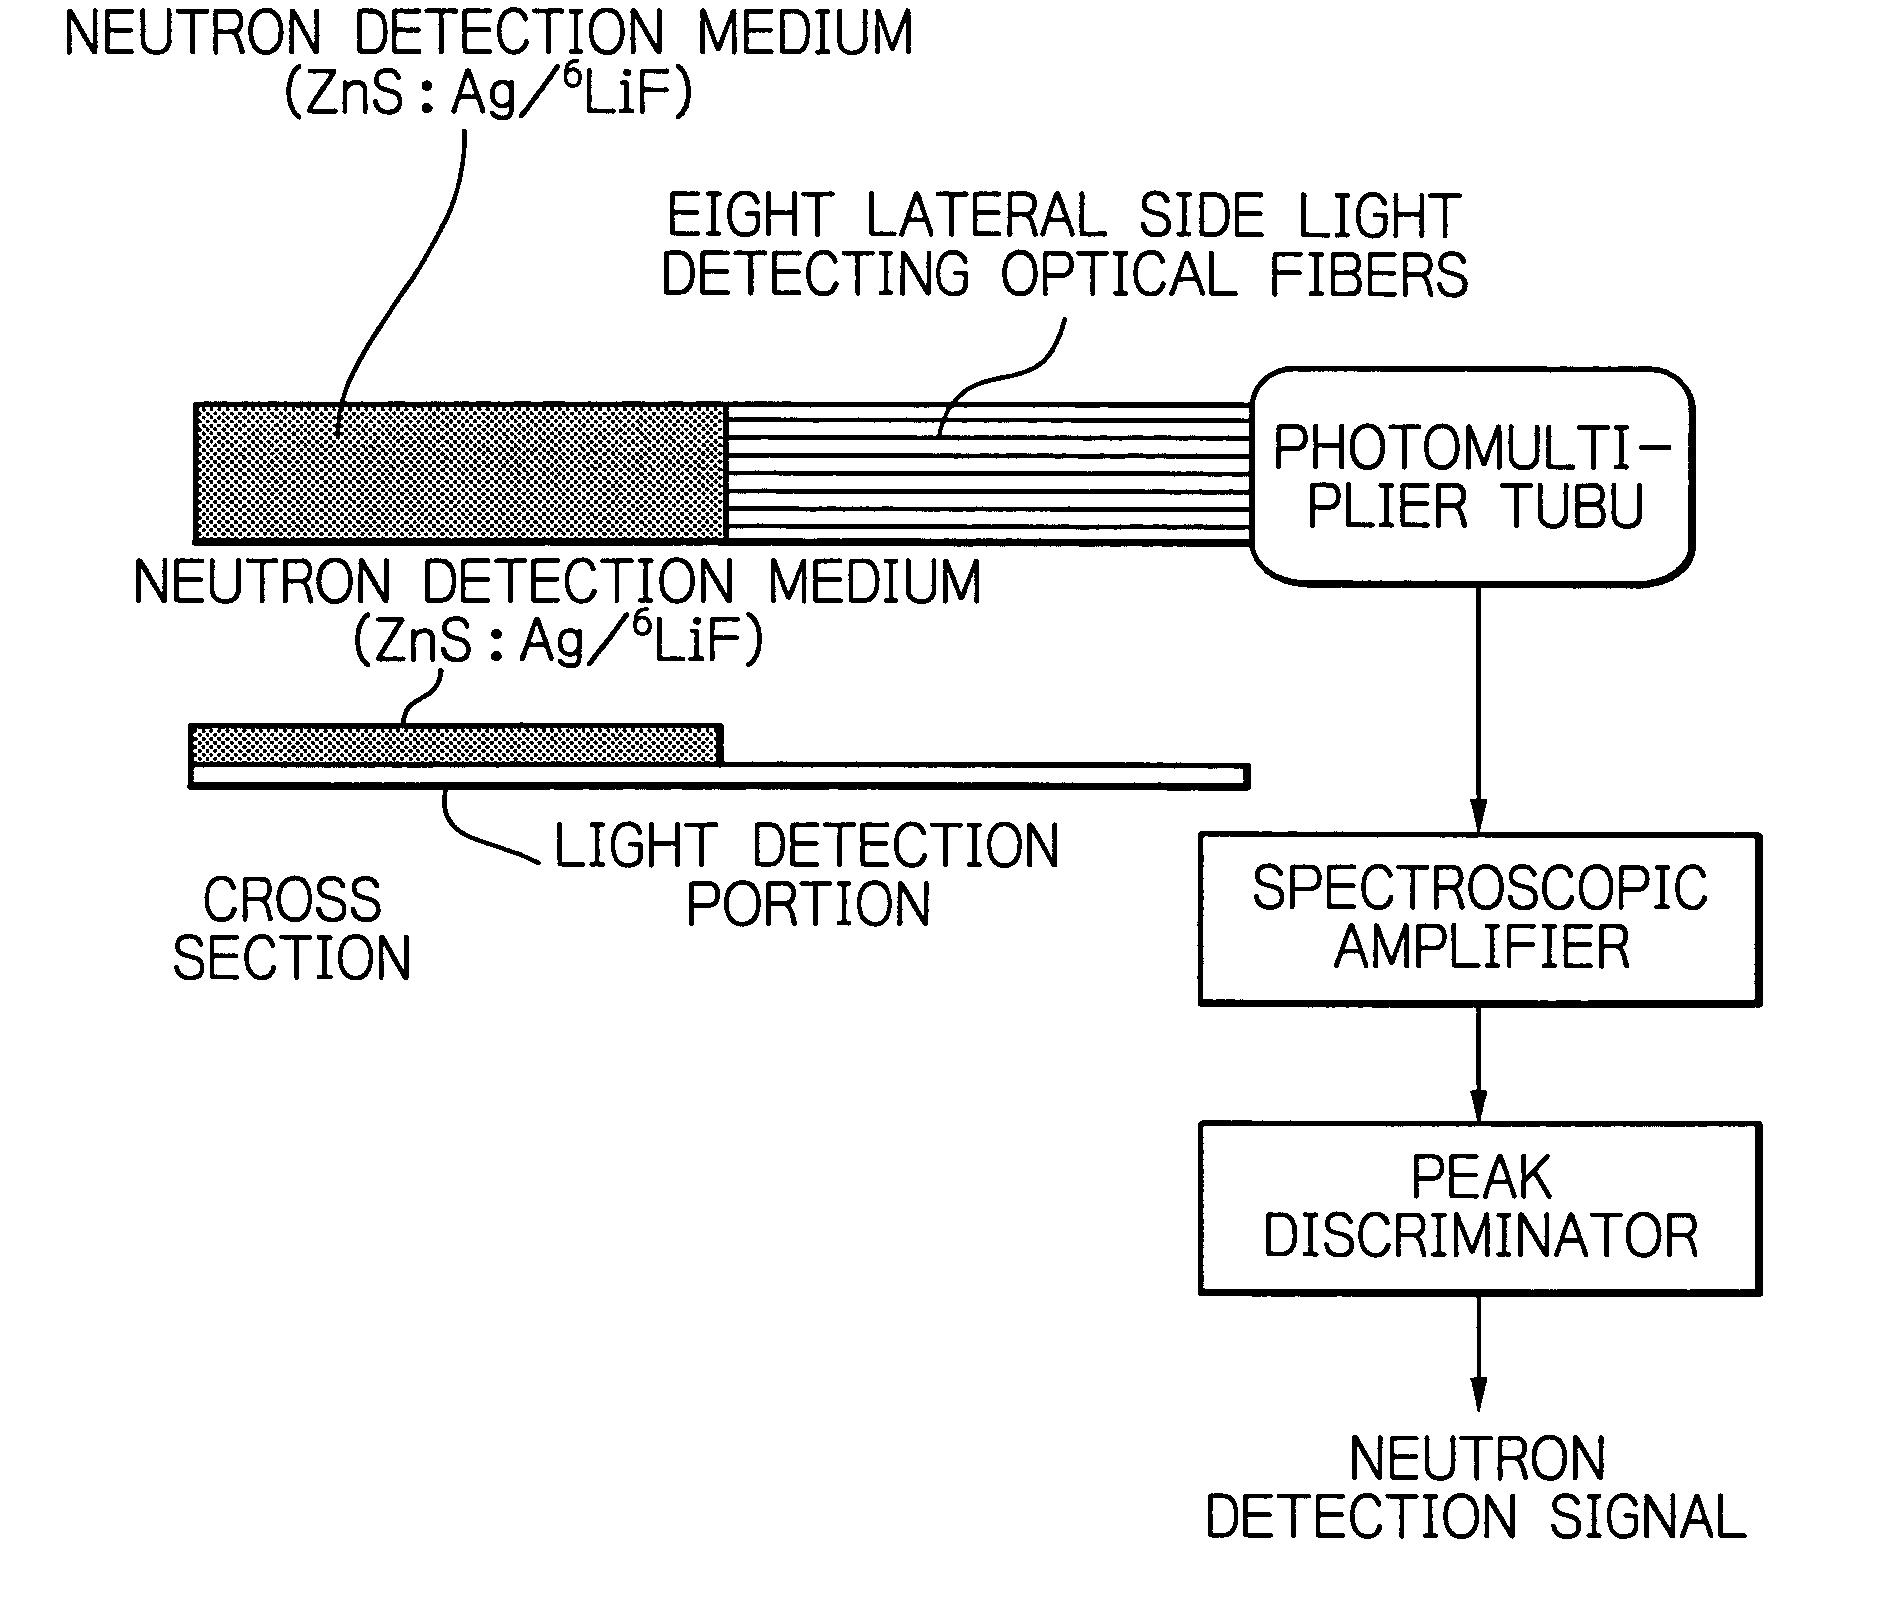 Radiation or neutron detector using fiber optics